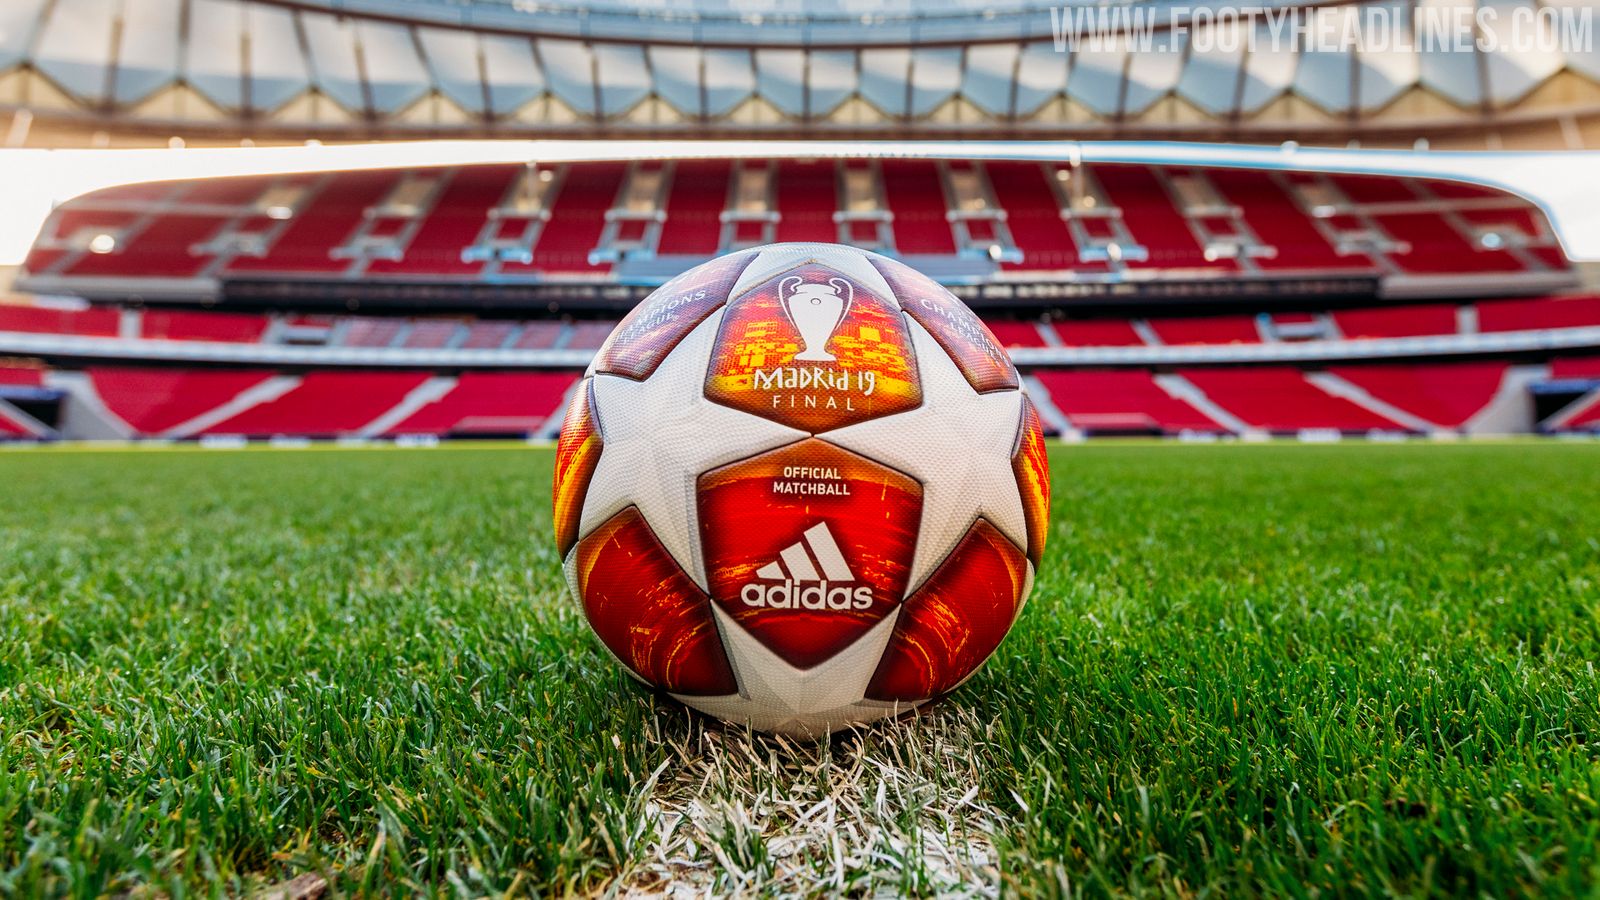 Adidas 2019 Champions League Madrid Final Ball Revealed ...